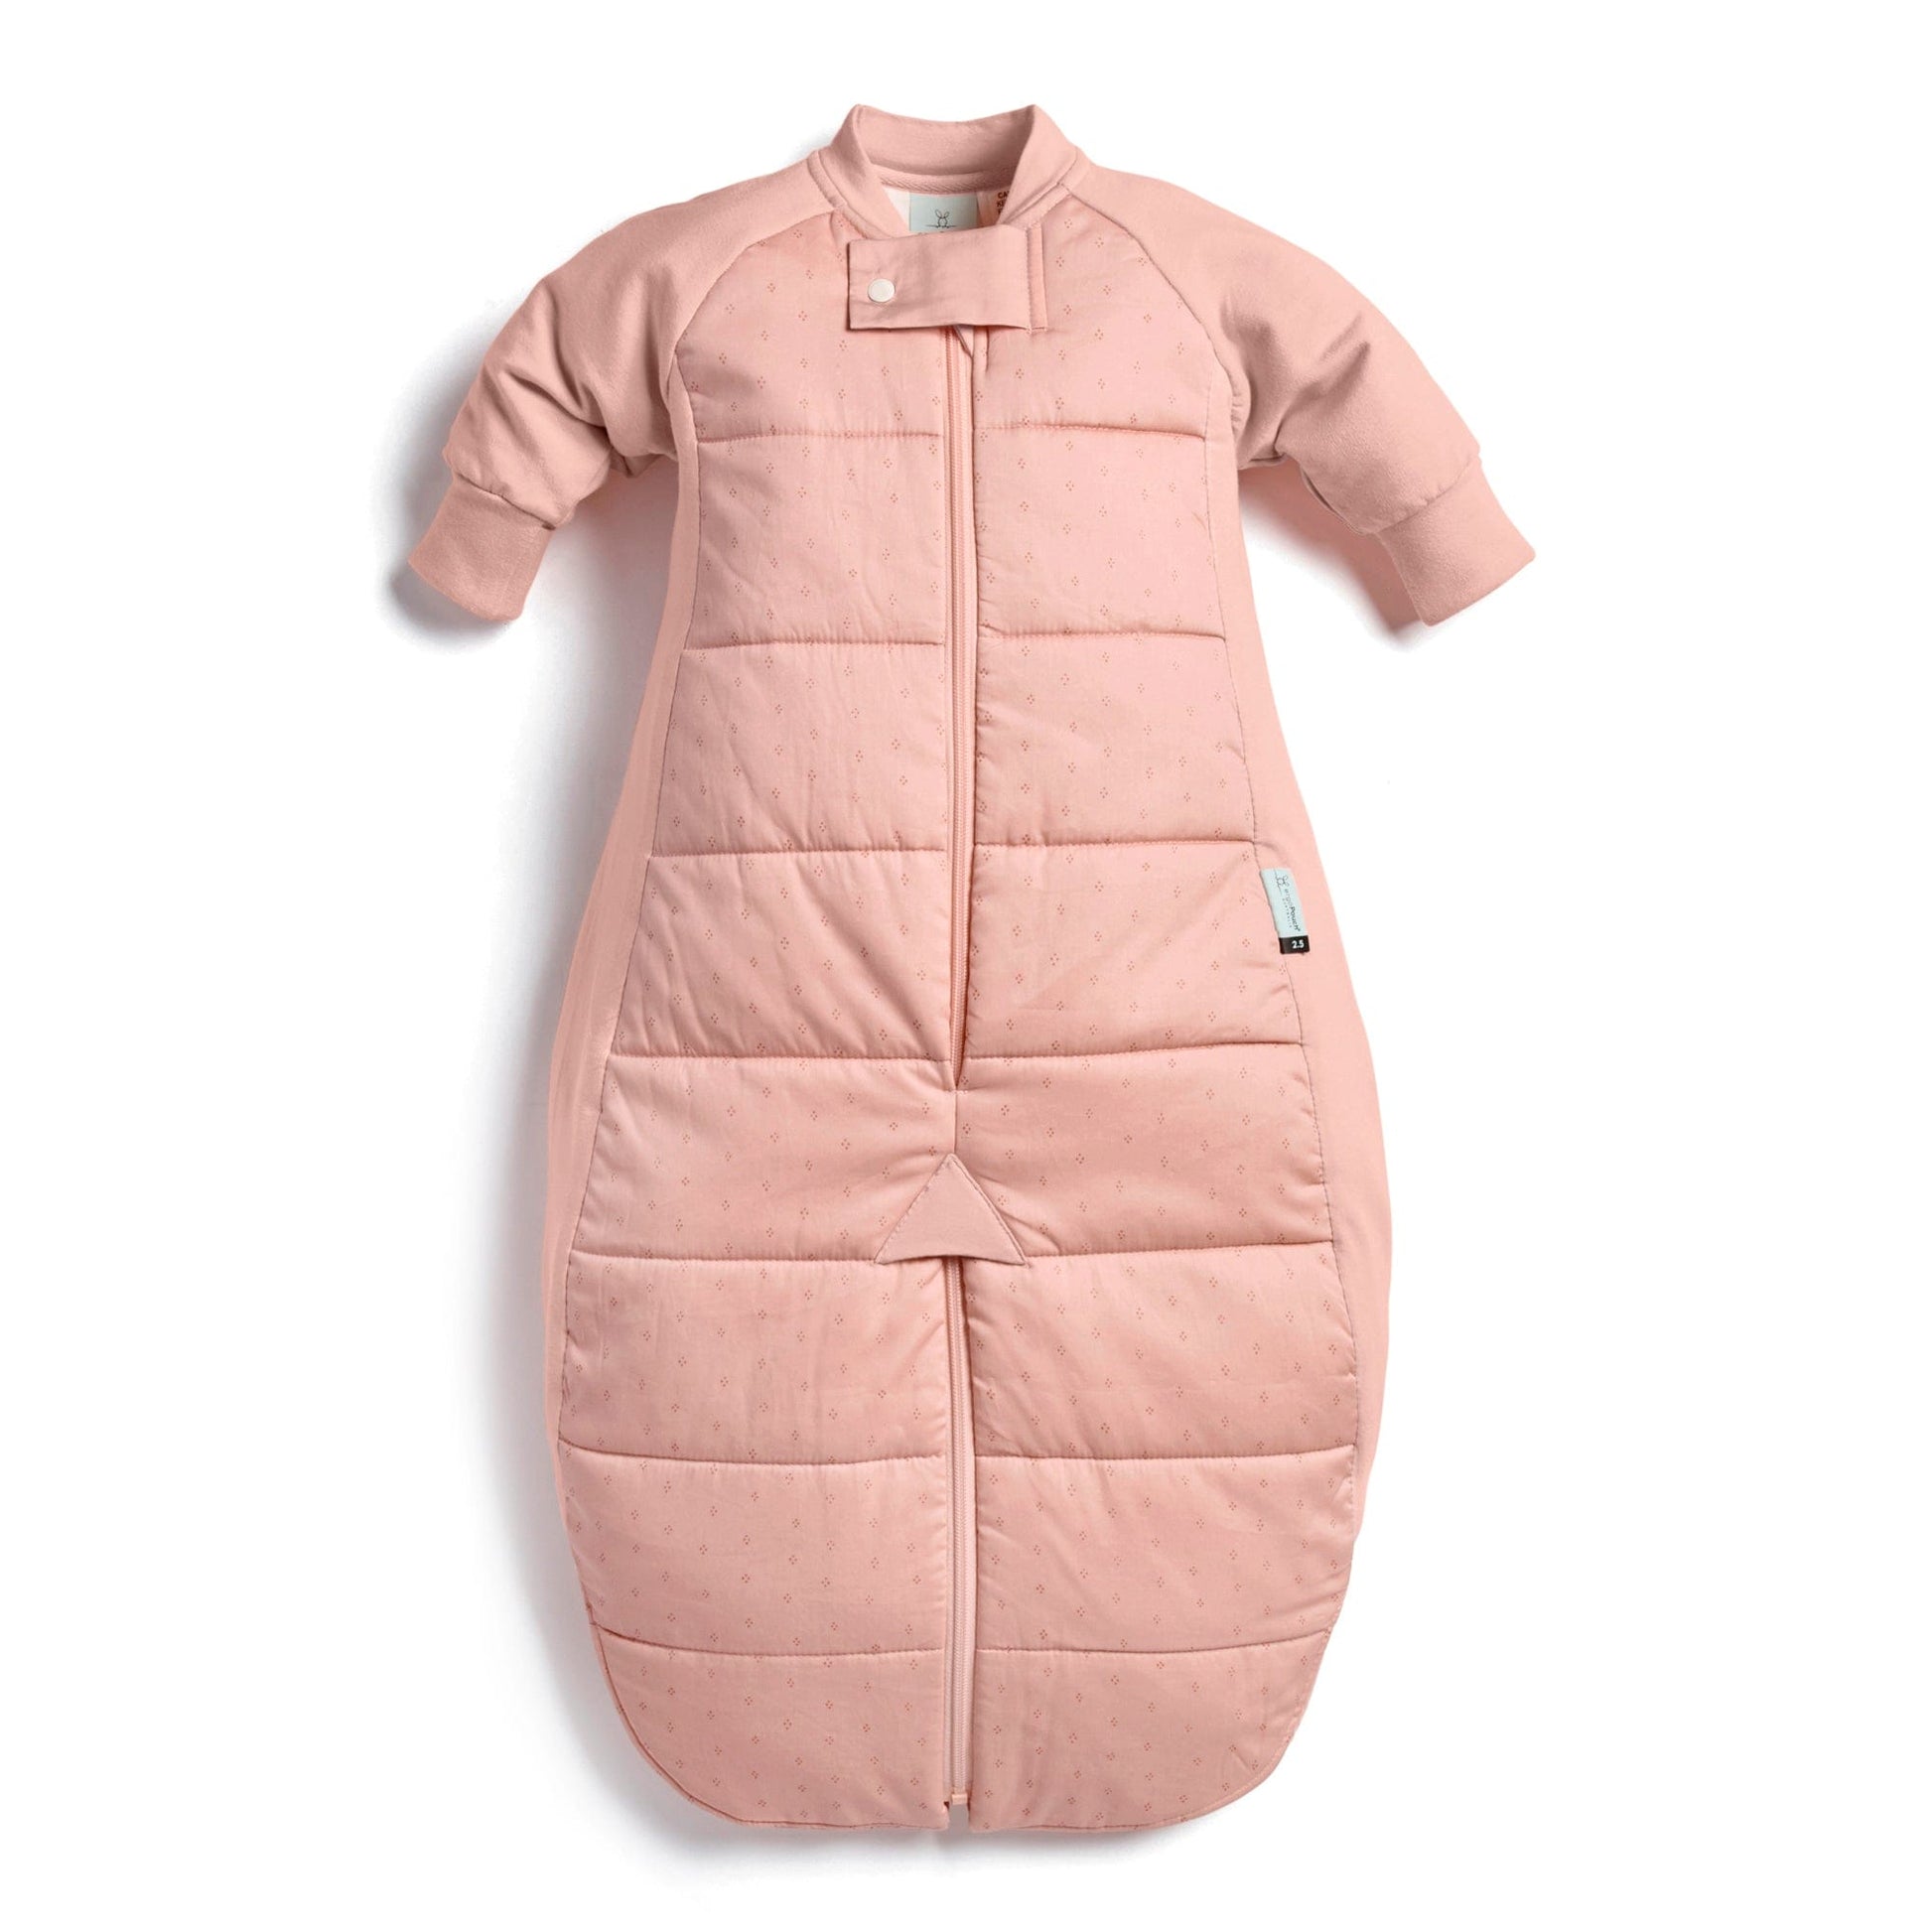 ErgoPouch - Sleep Suit Bag - Berries - 2.5 Tog - Stylemykid.com